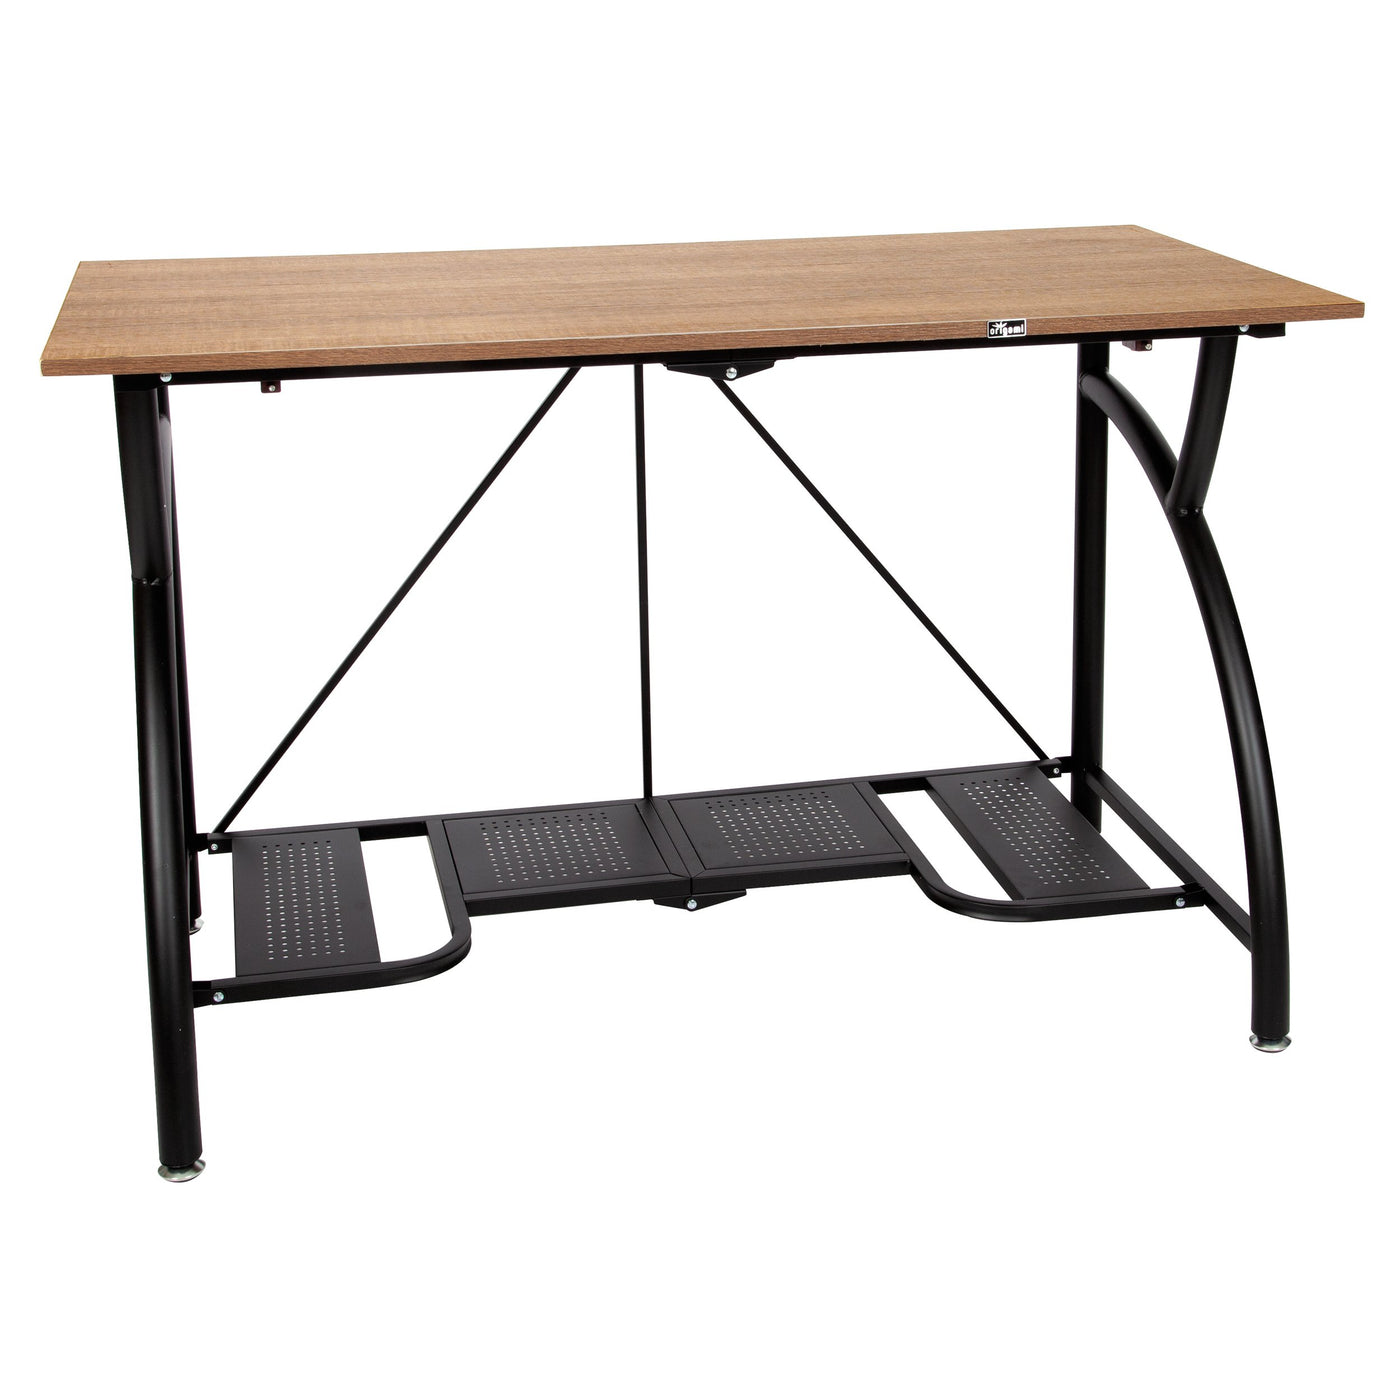 Large Foldout Two-Shelf Desk